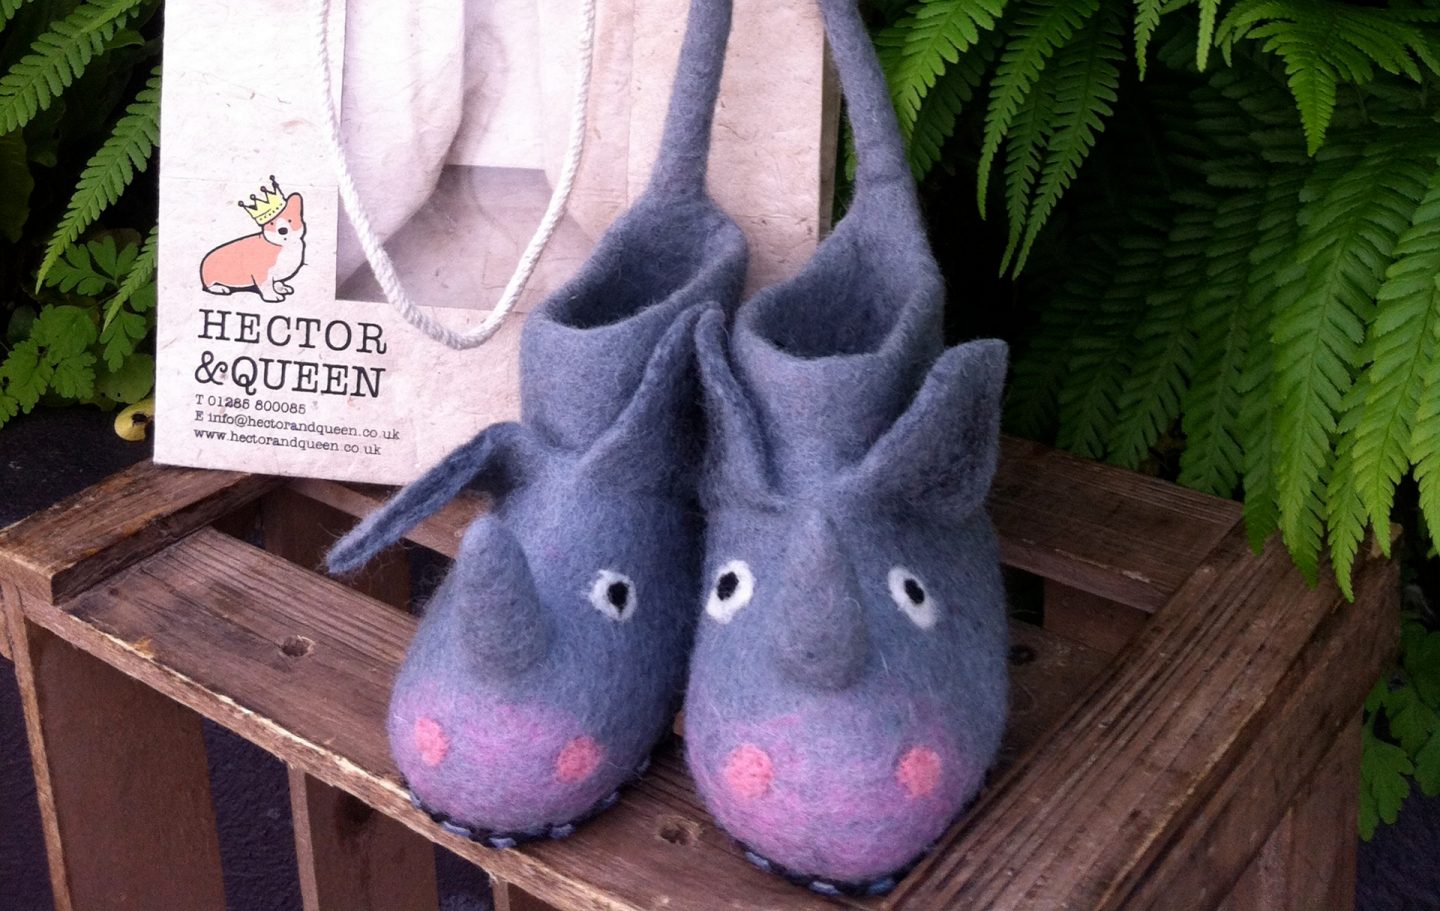 Hector & Queen Rhino Slippers